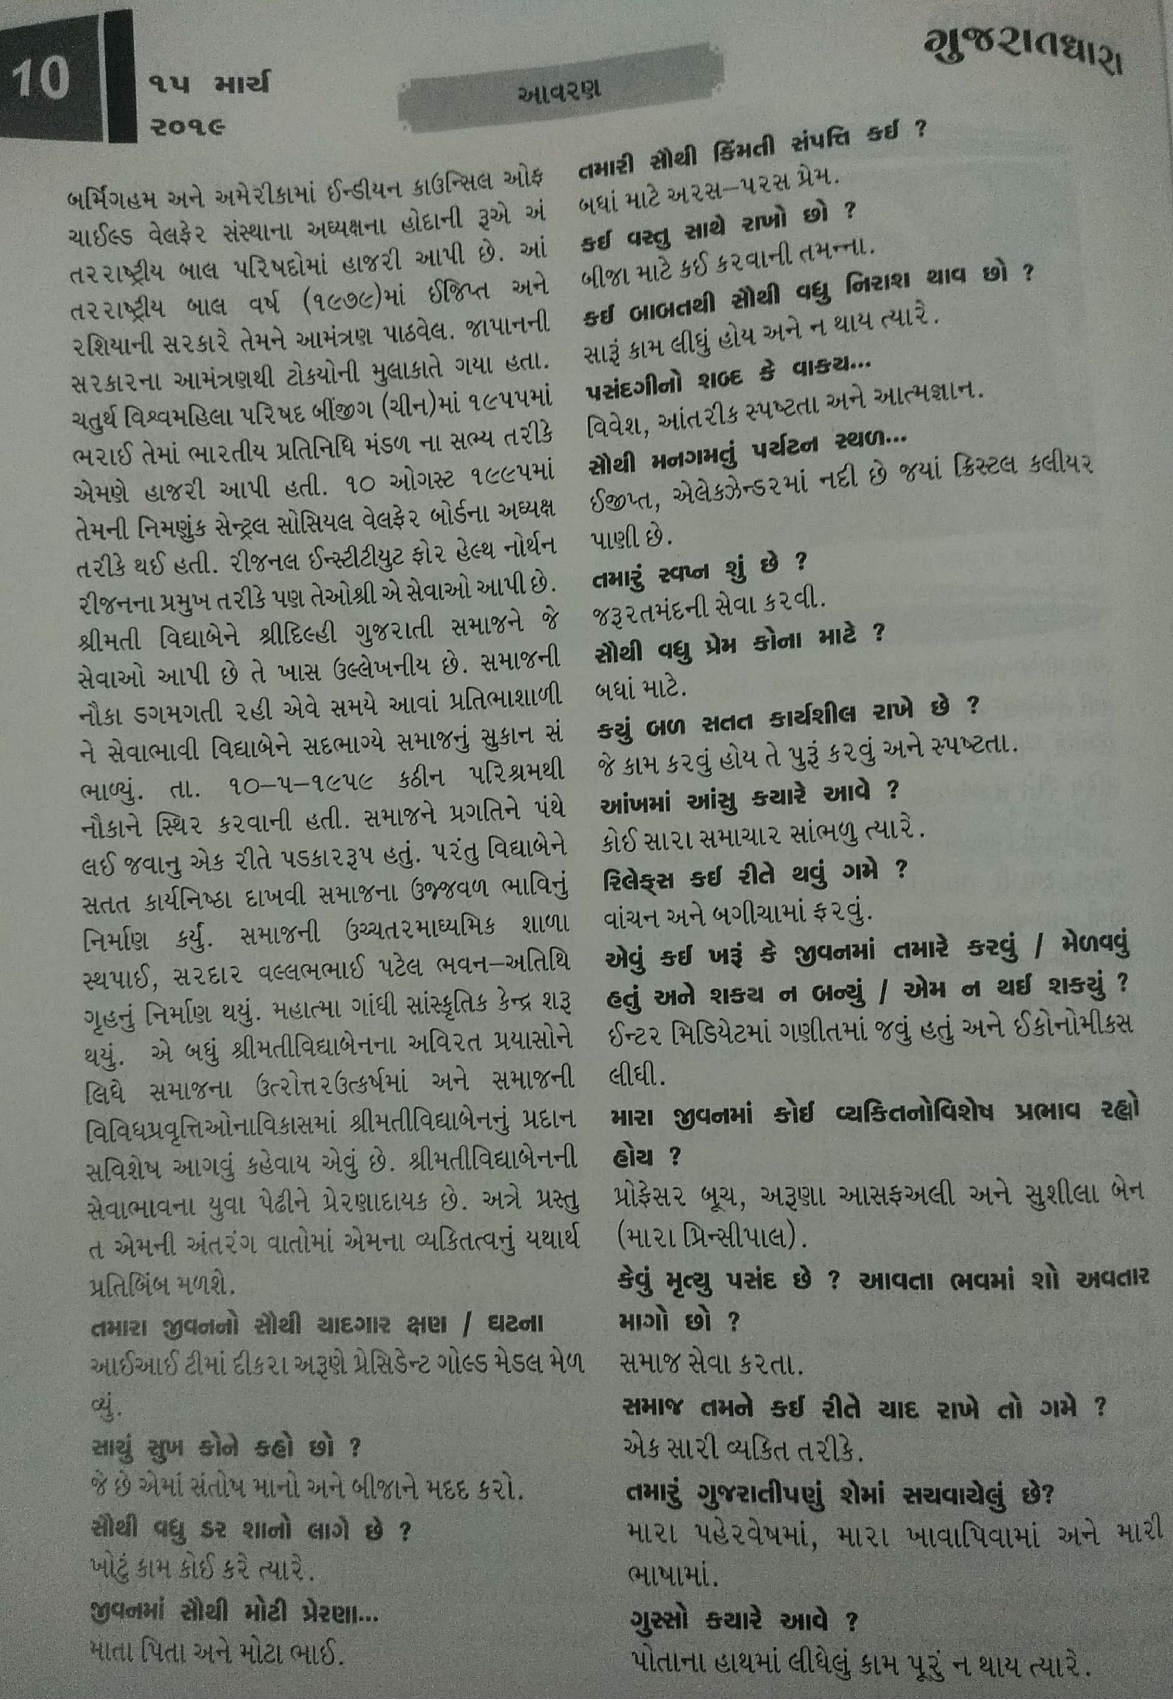 Article in Gujaratdhara